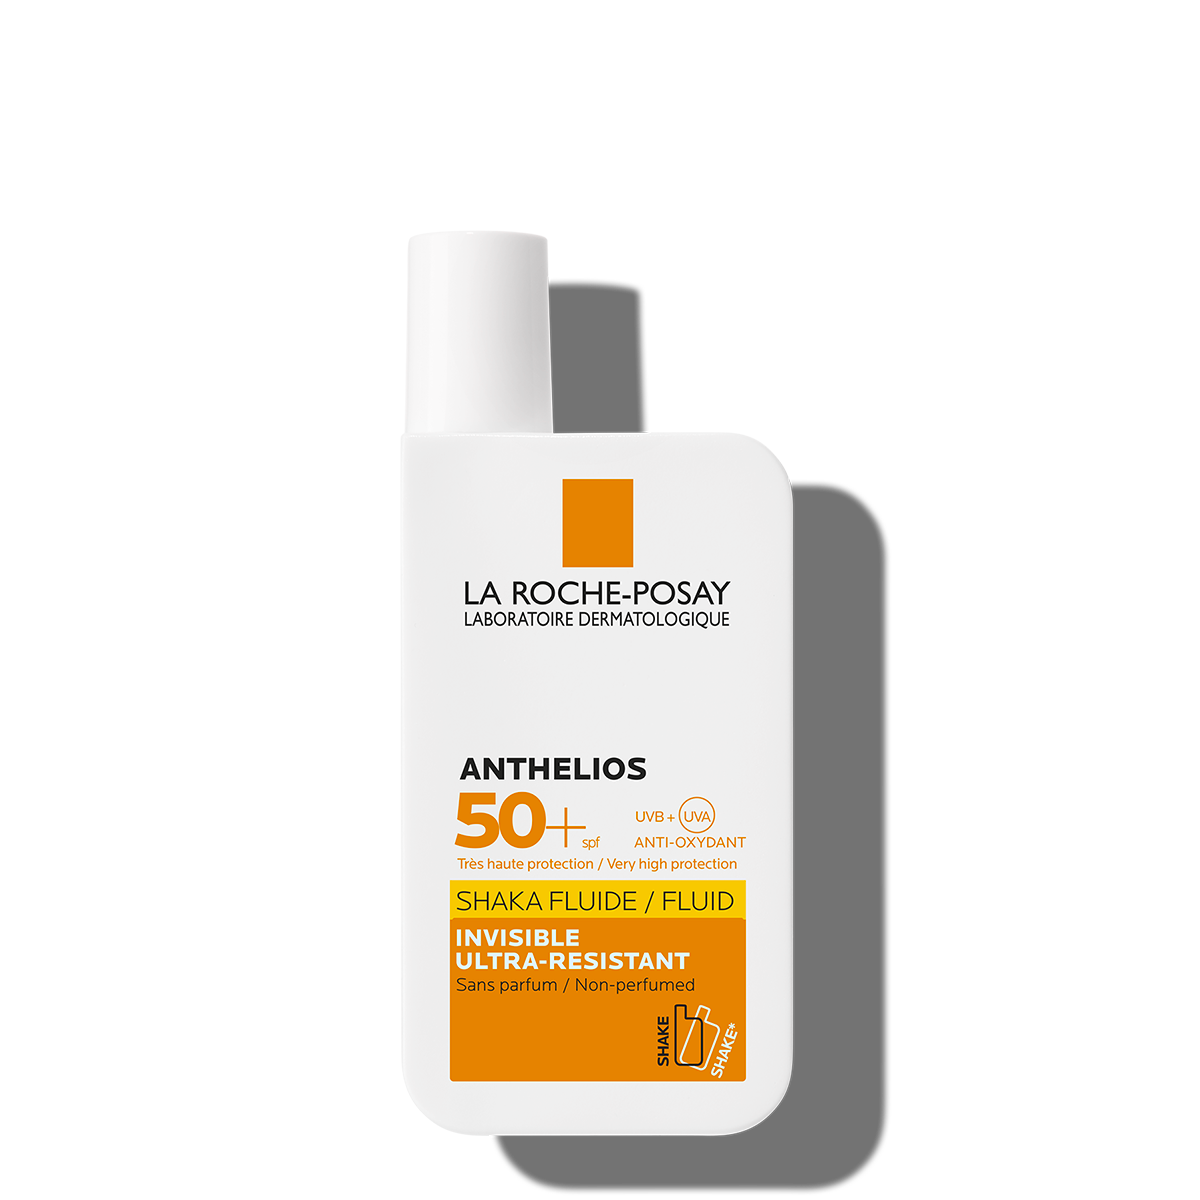 https://www.laroche-posay.ua/-/media/project/loreal/brand-sites/lrp/emea/ua/products/anthelios/shaka-fluid/shaka-fluid-spf50-plus-non-perfumed/la-roche-posay-productpage-sun-anthelios-shaka-fluid-spf50-50ml-fragrance-free-30162662-front.png